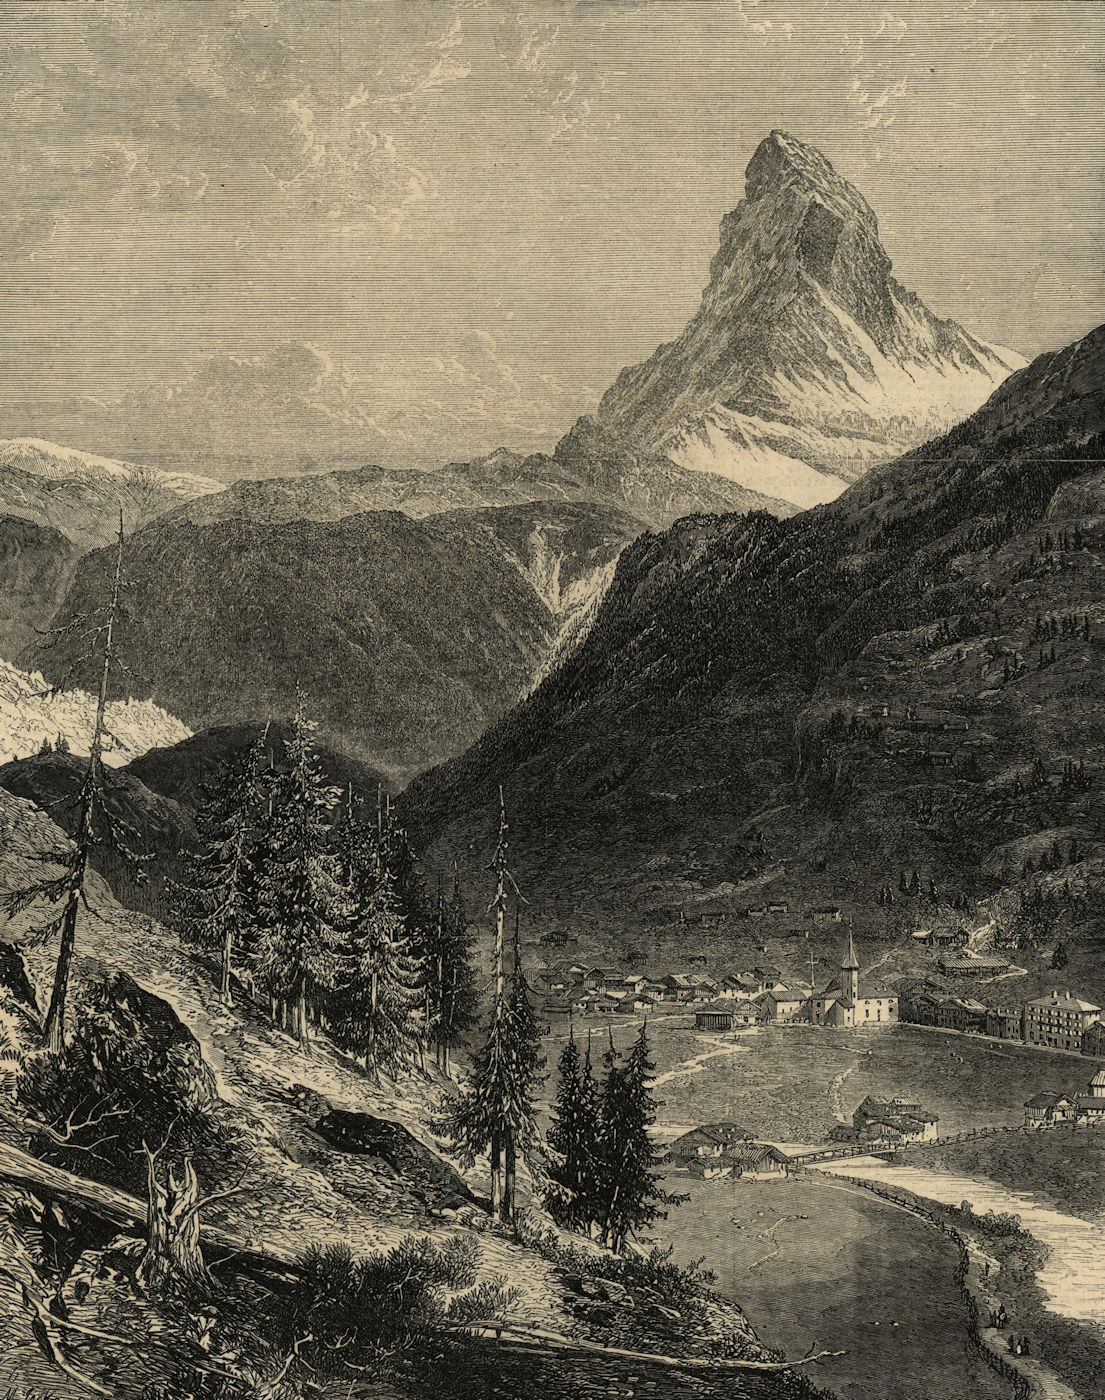 The Matterhorn with Zermatt in the foreground. Switzerland 1865 ILN full page